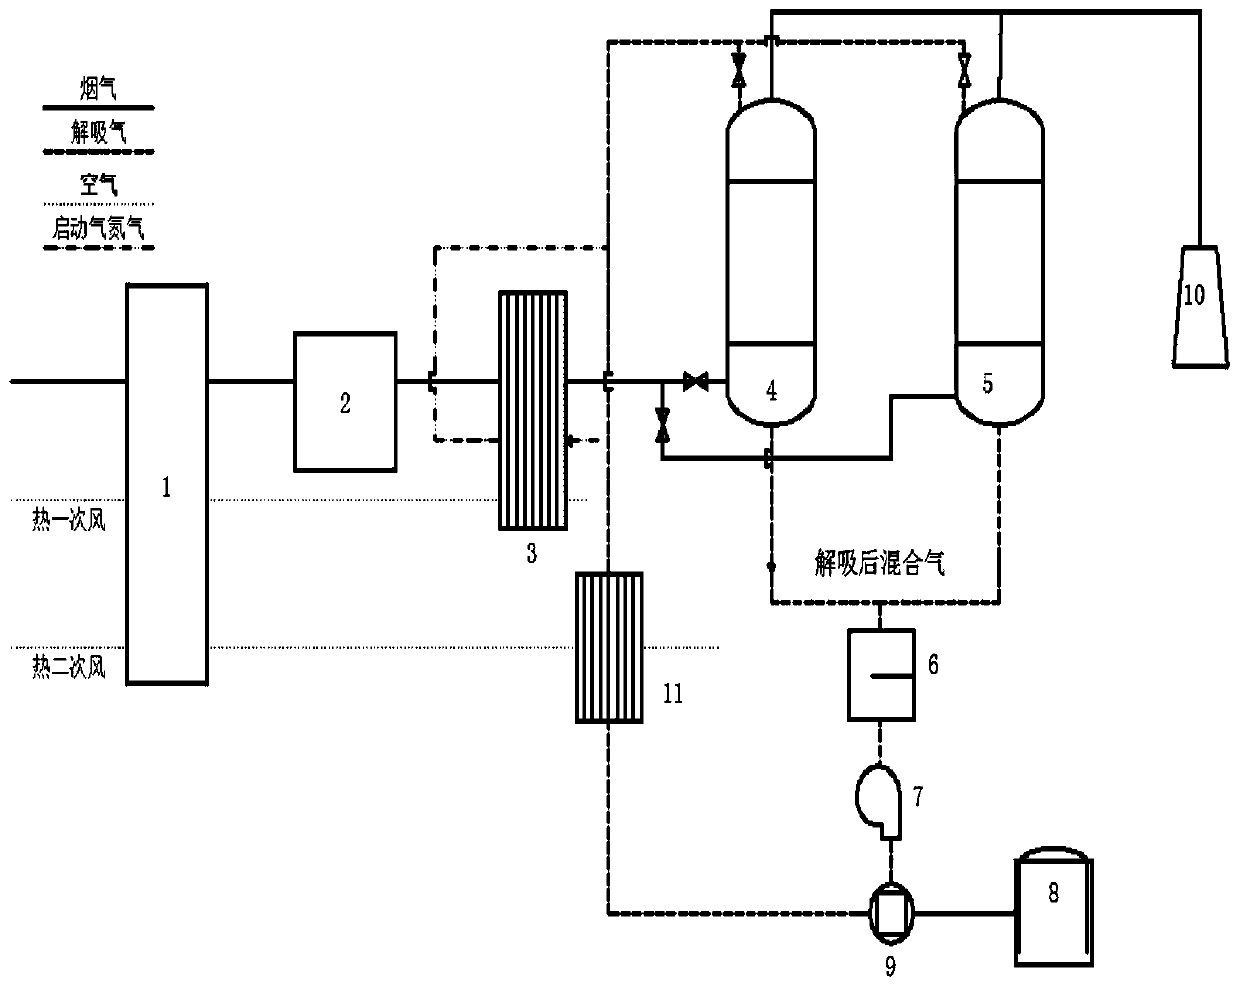 A flue gas carbon-based loaded ionic liquid flue gas desulfurization method